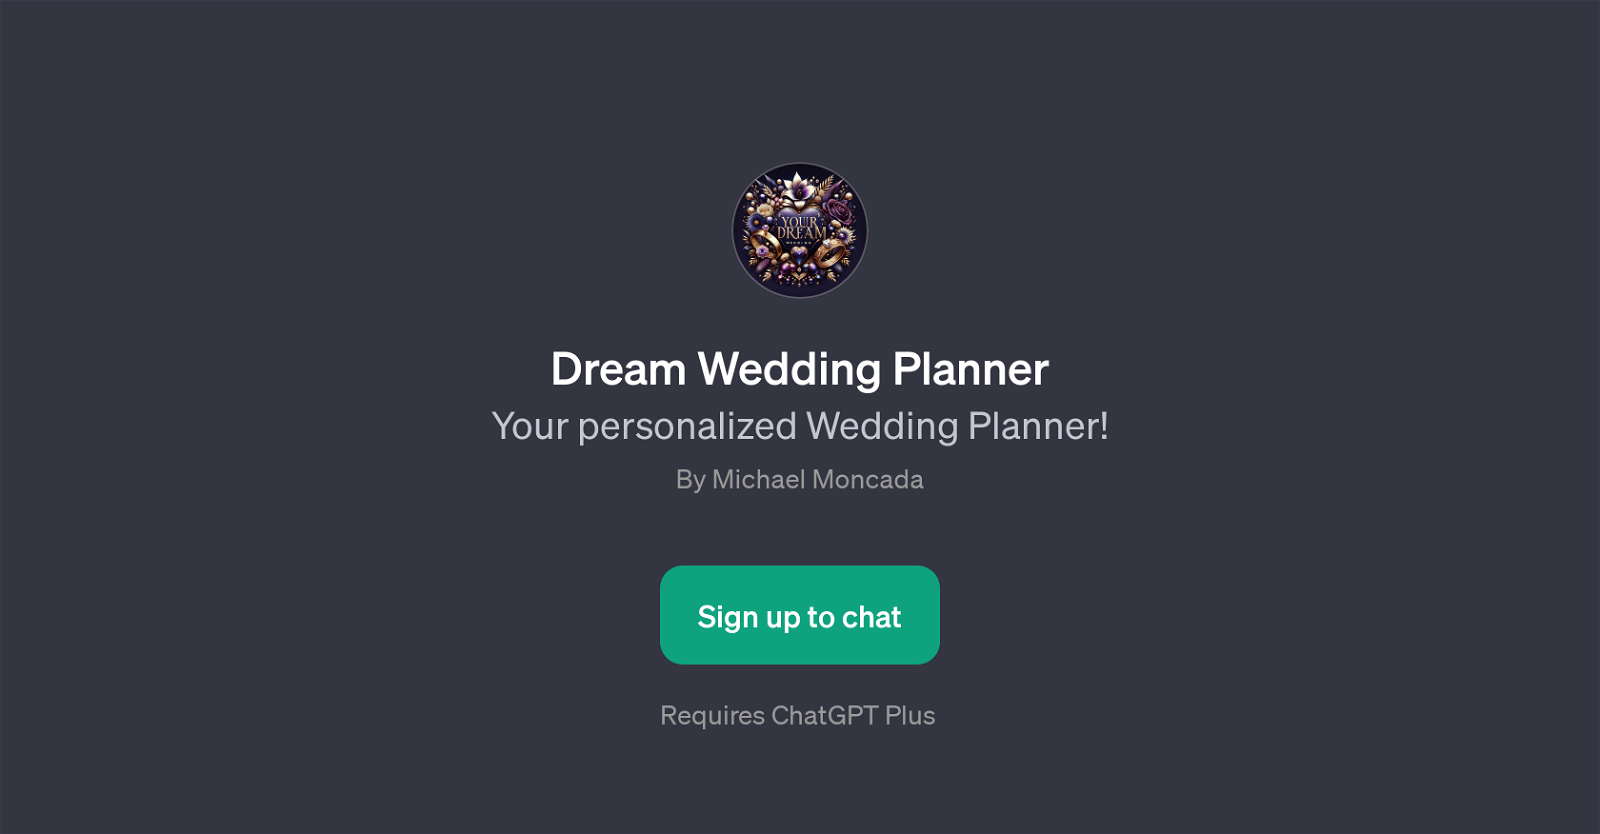 Dream Wedding Planner website